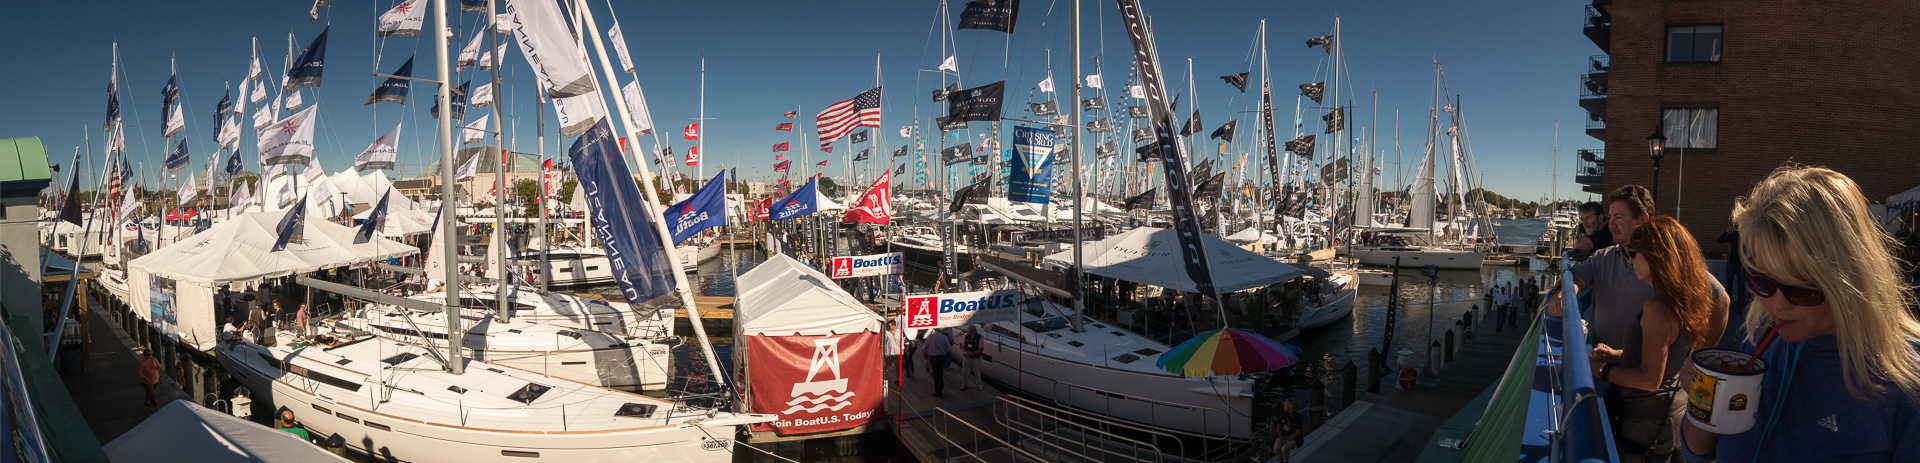 Annapolis Sail Boat Show